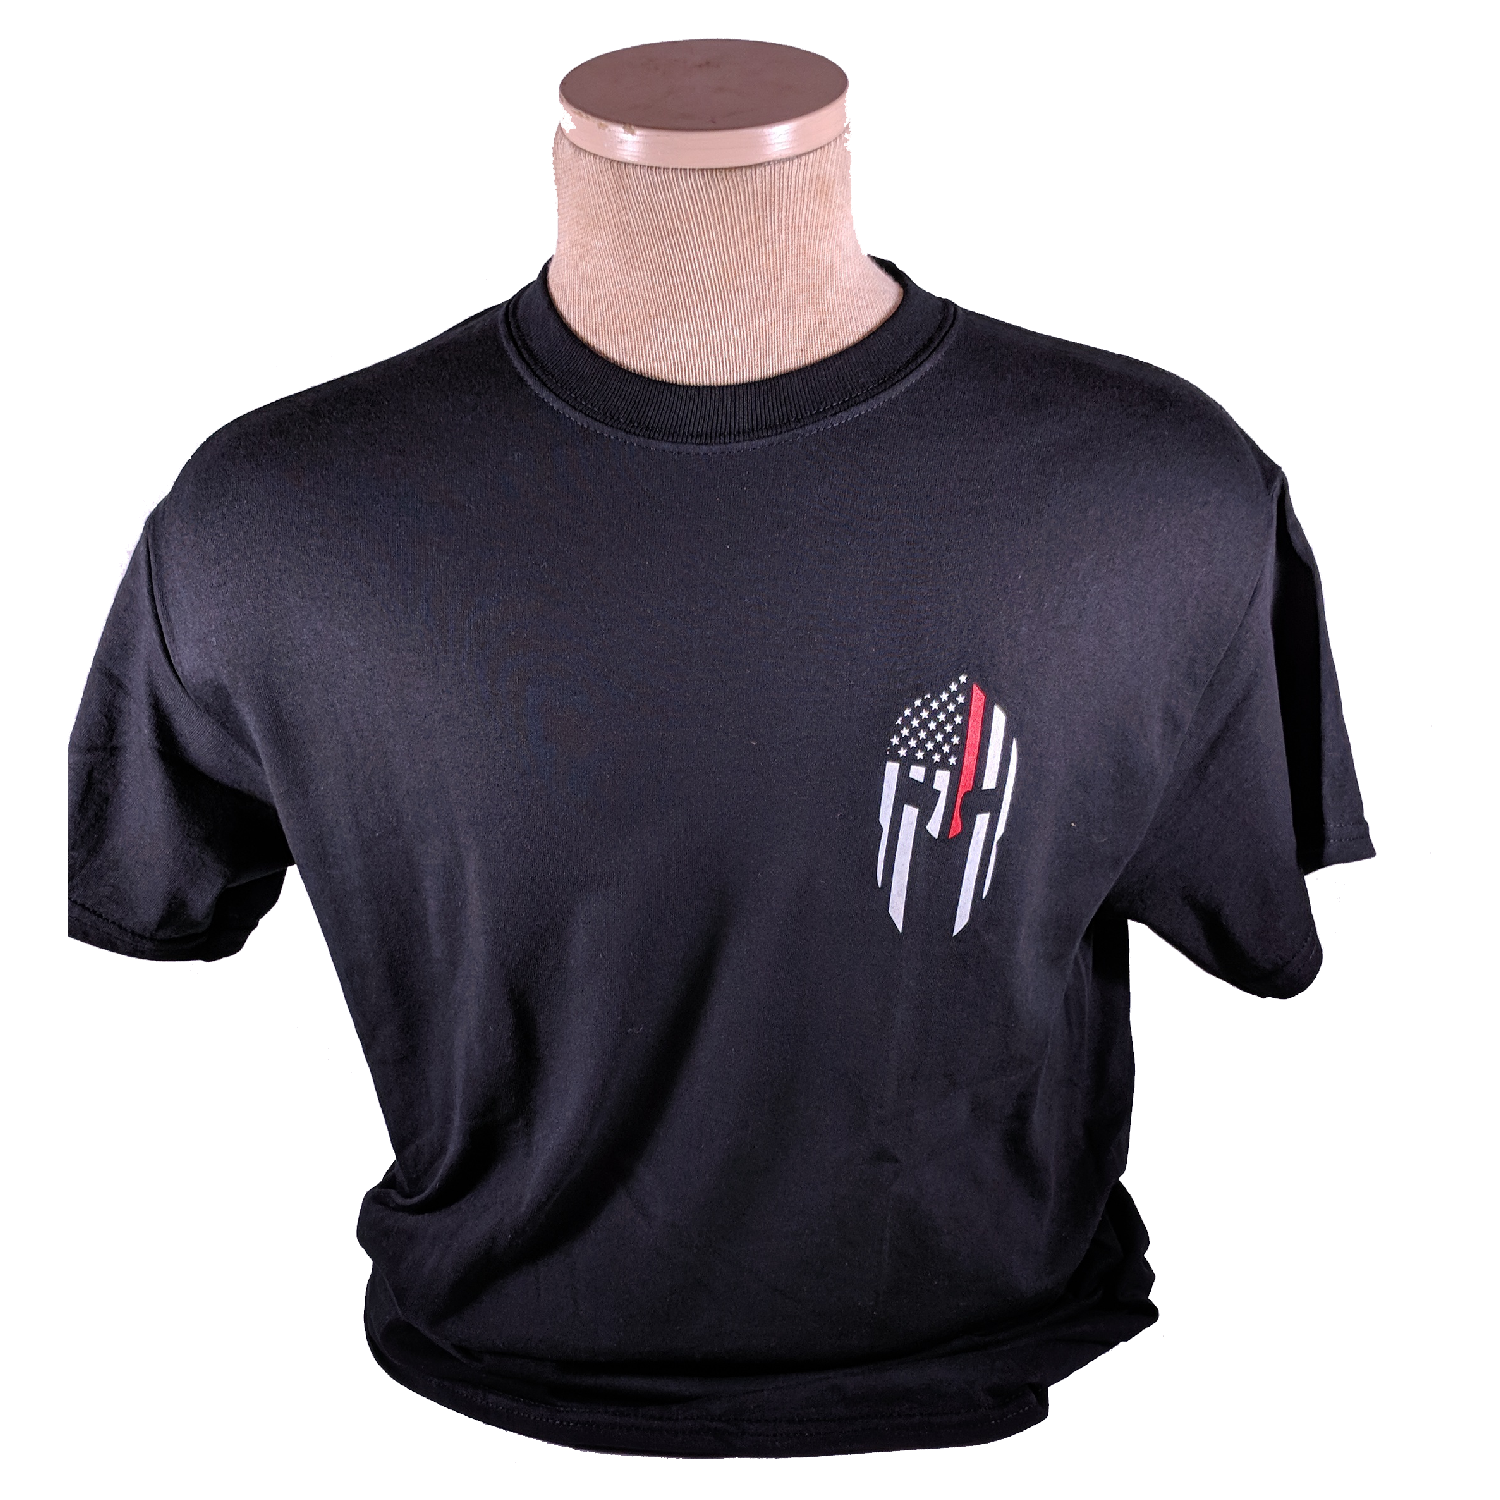 Chicago Fire Training Short Sleeve Shirt Top T-Shirt Mens 2019 Red